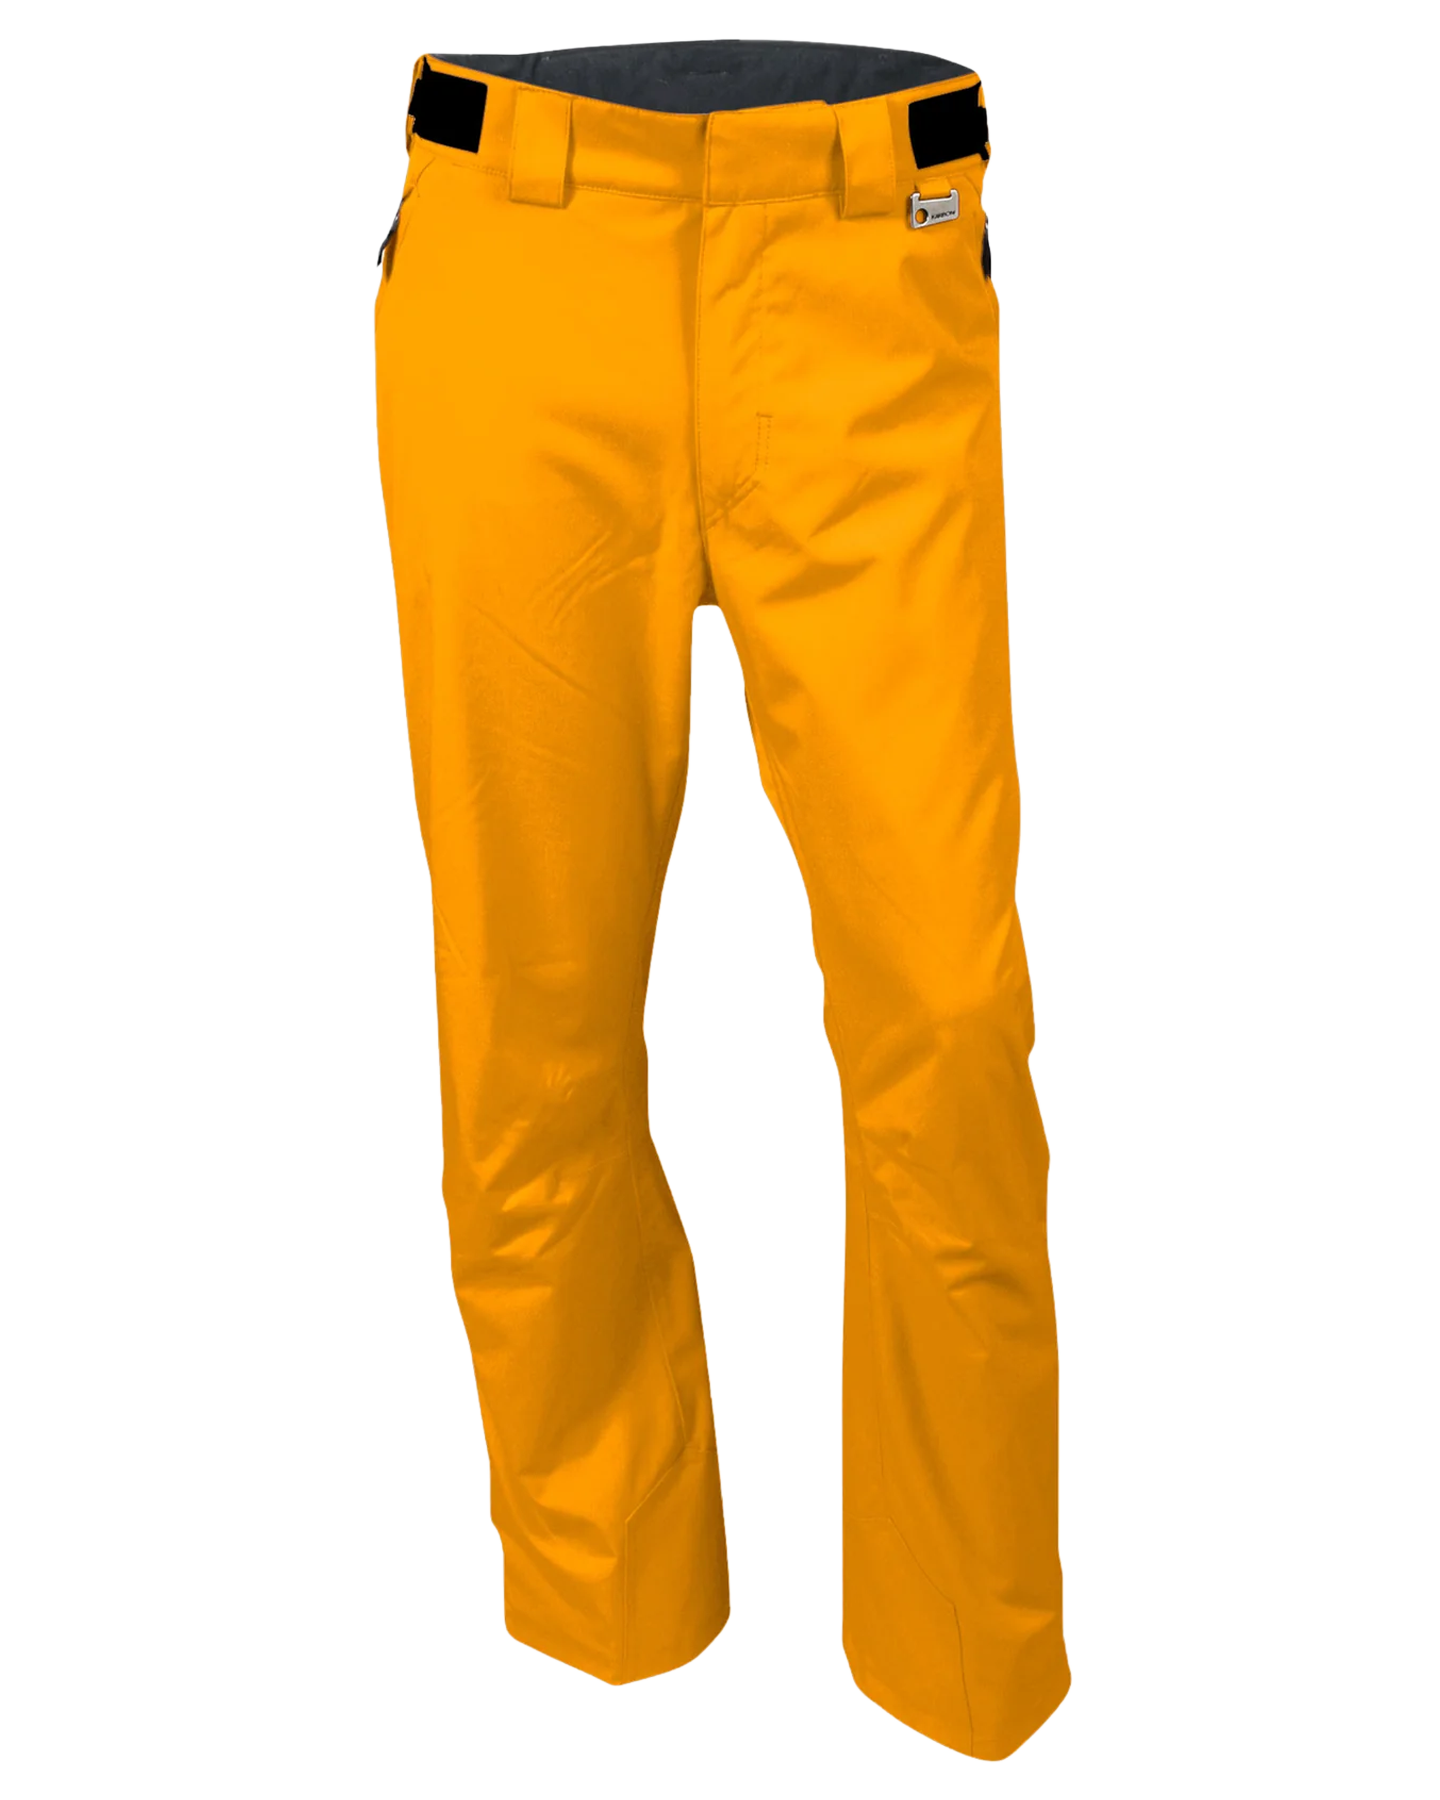 Karbon Silver II Graphite Alpha Snow Pants - Carrot Men's Snow Pants - SnowSkiersWarehouse